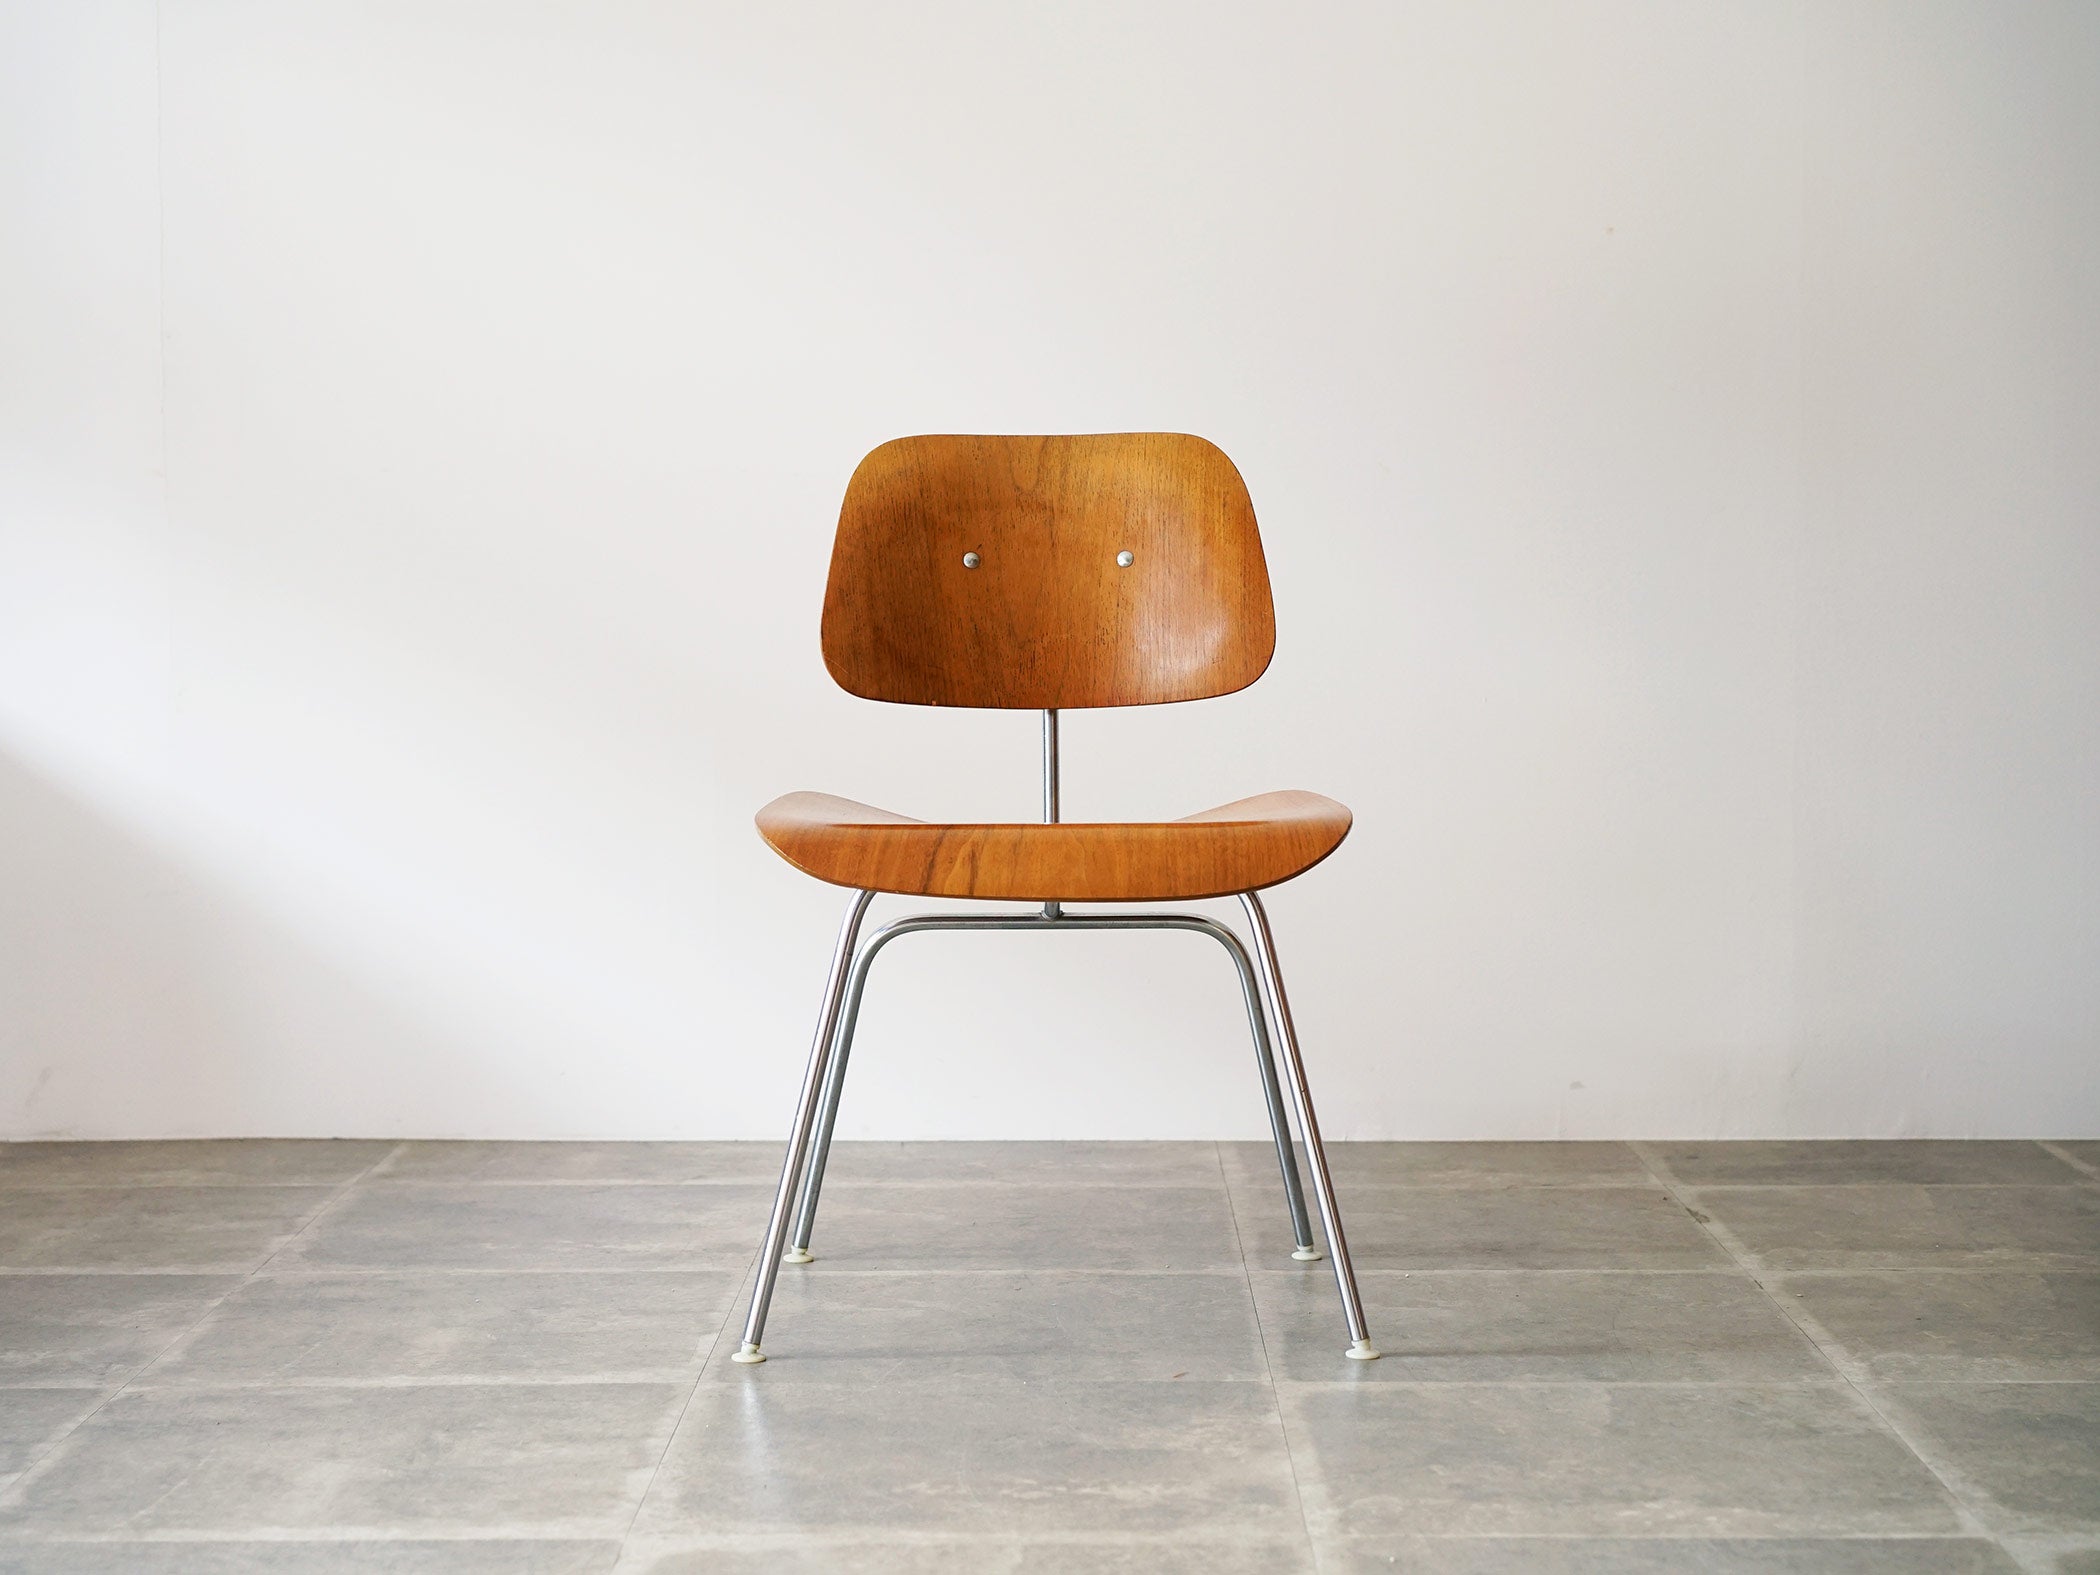 Charles Eames & Ray Eames “DCM” Chair